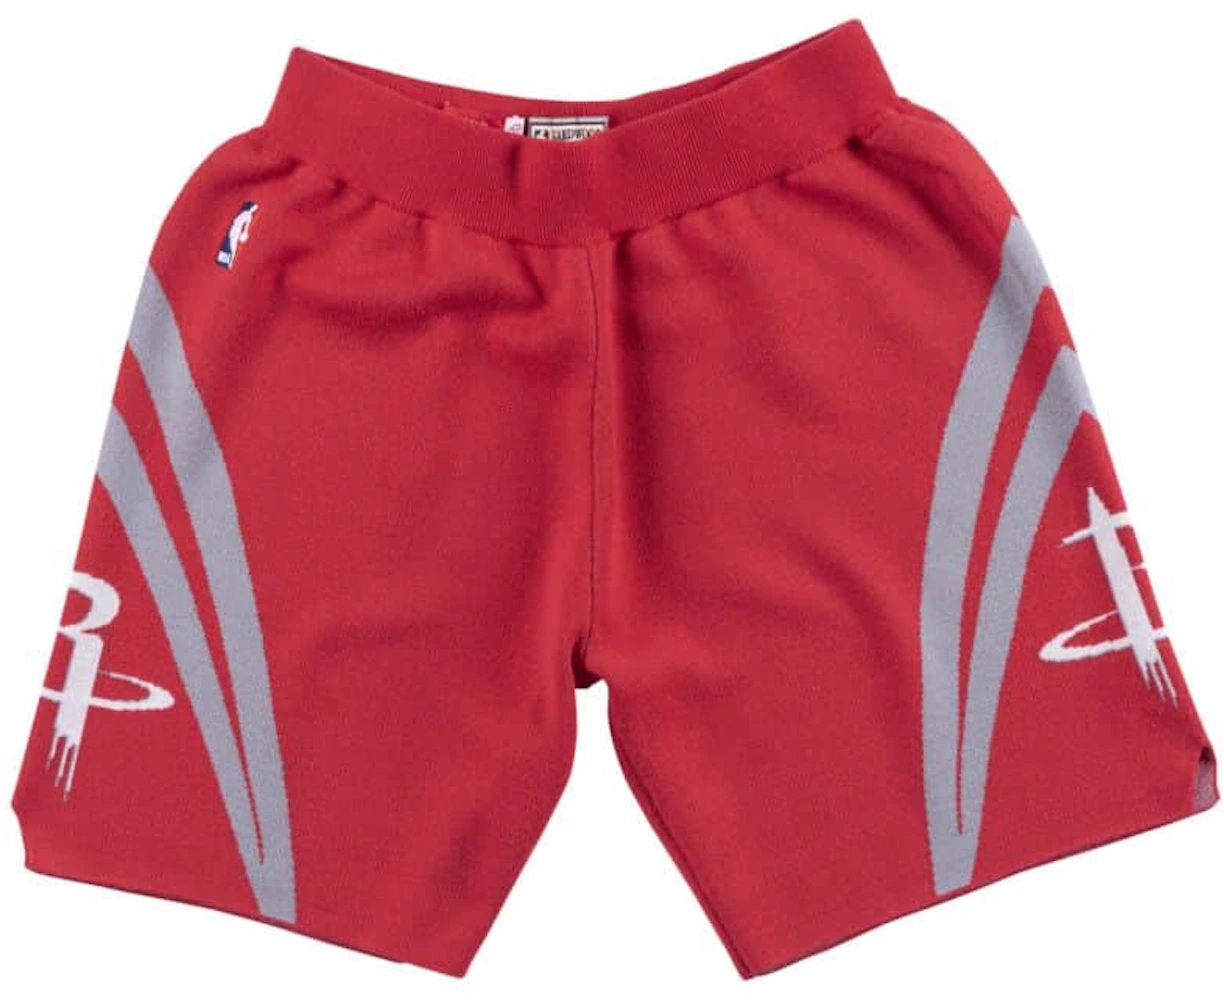 CLOT x Mitchell & Ness Rockets Yao Ming #11 Knitted Jersey Red